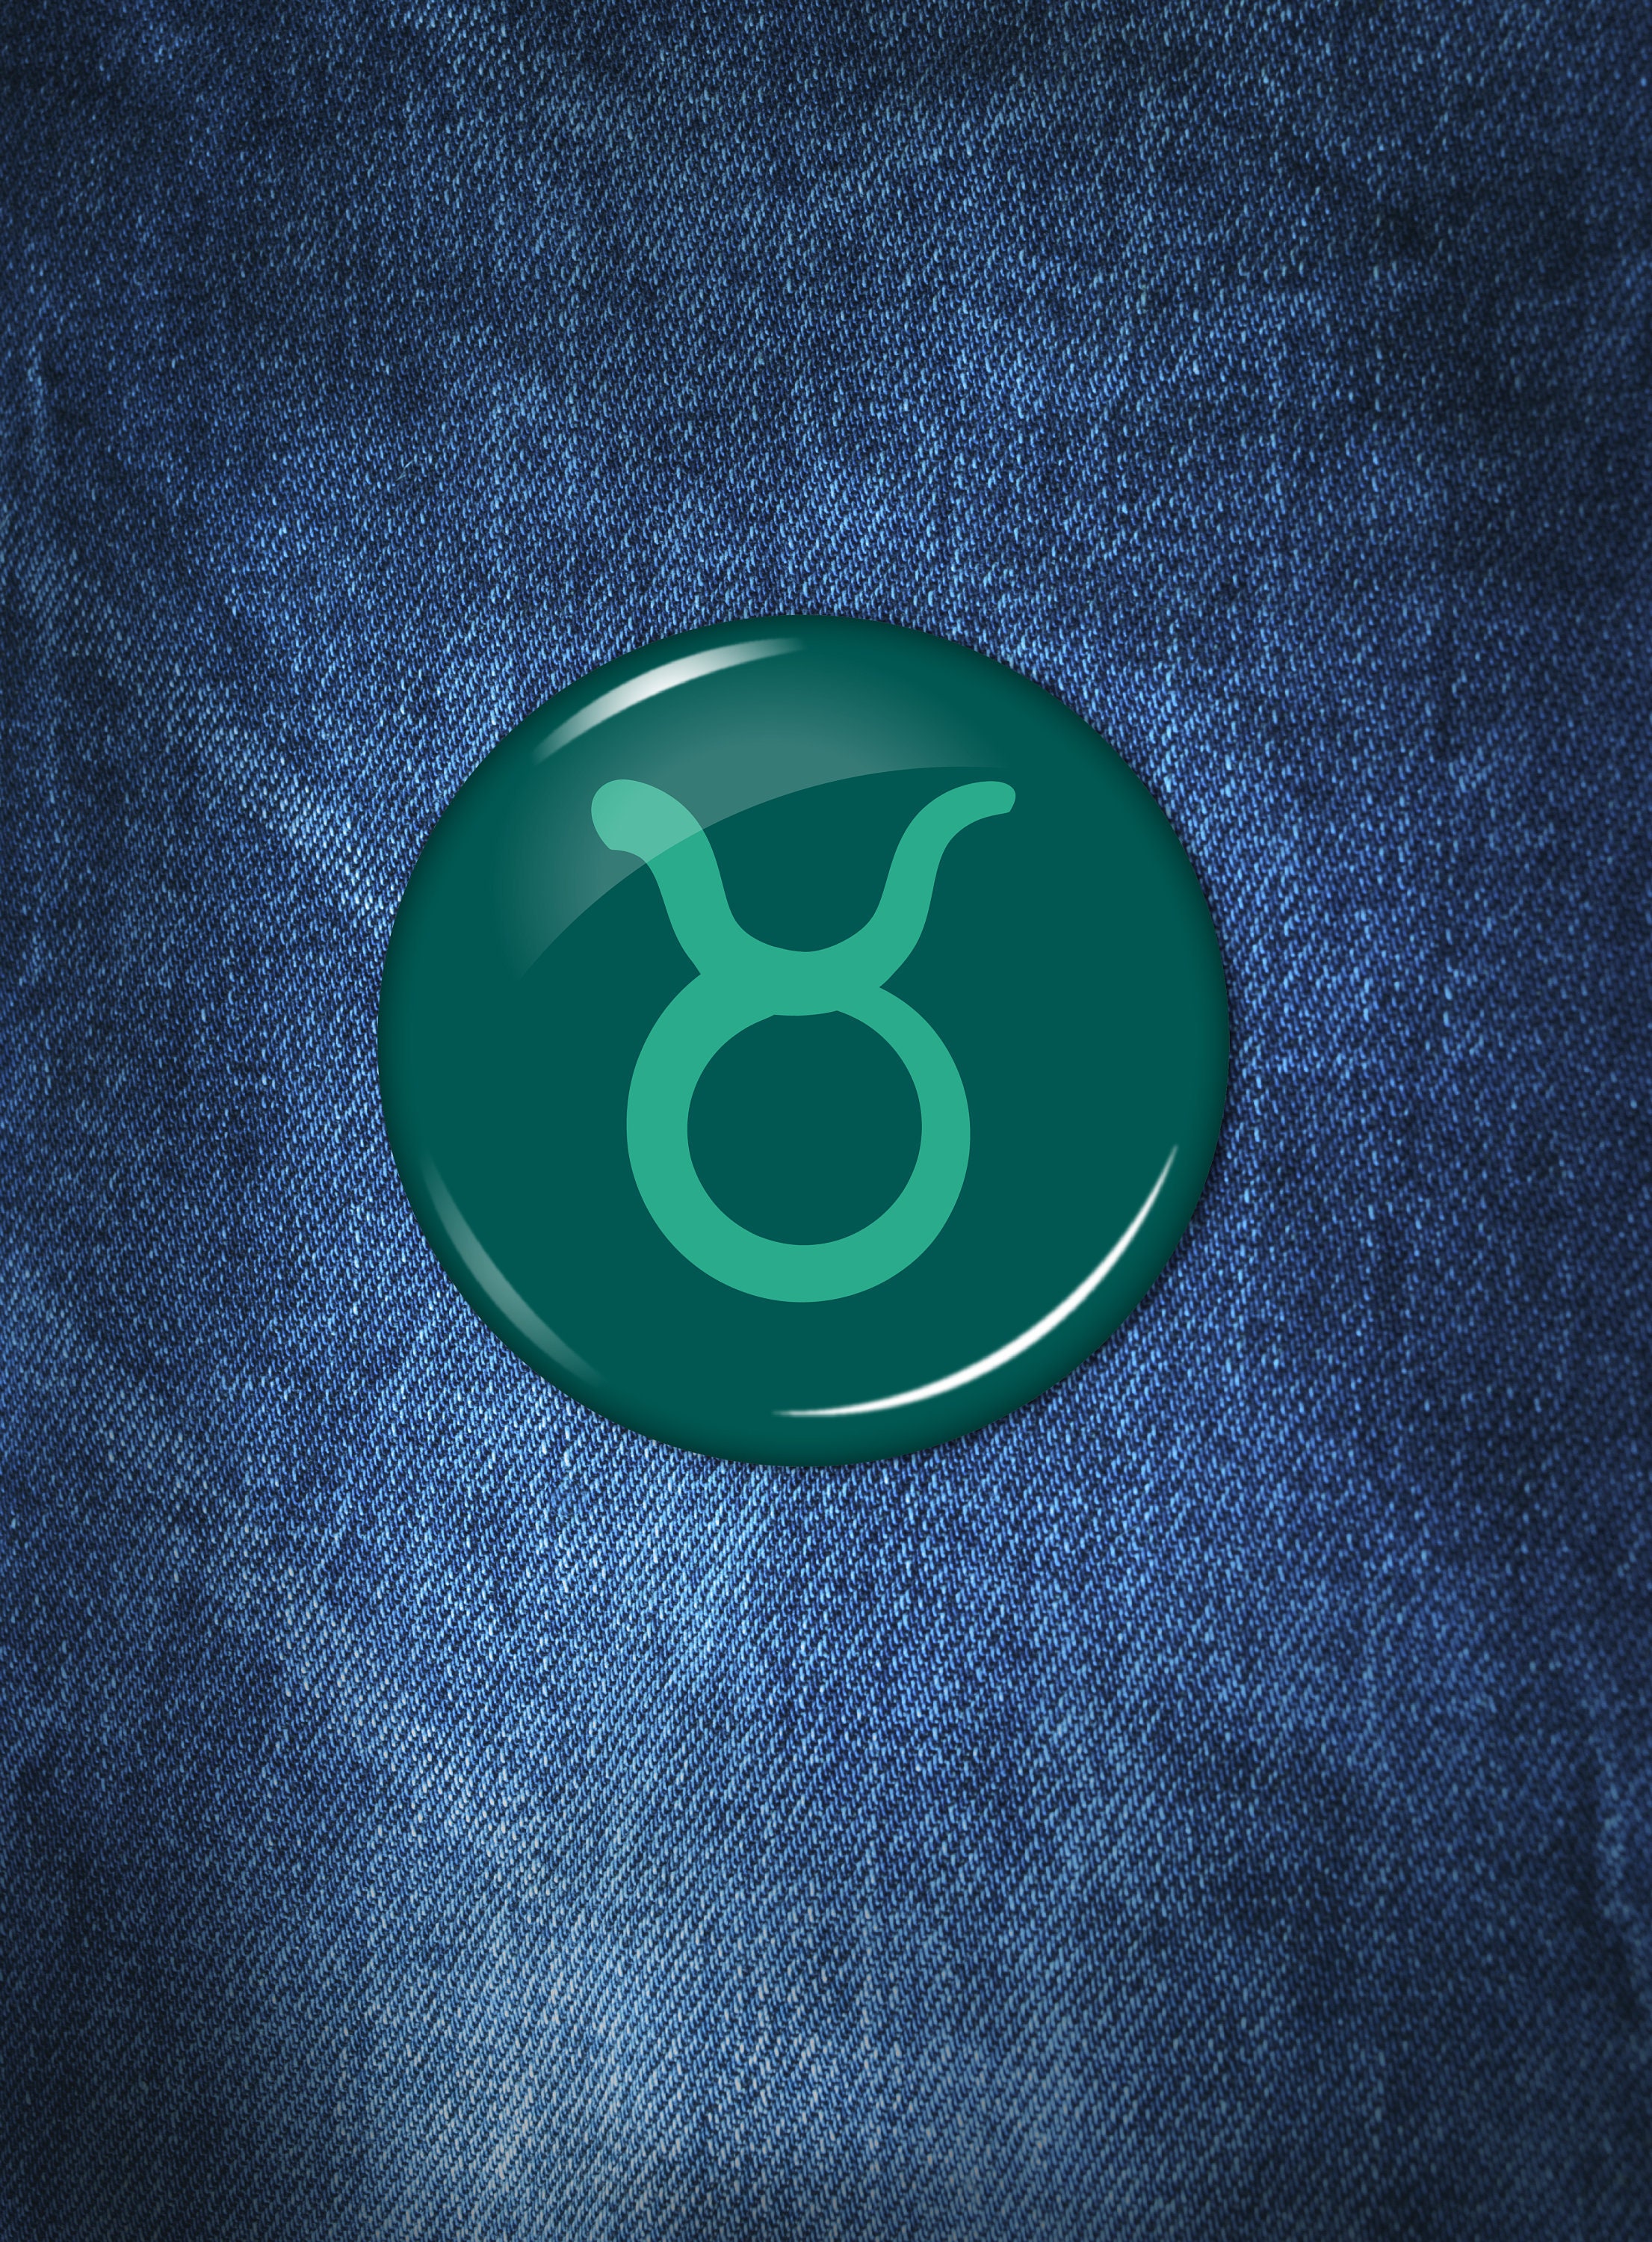 Taurus Button | Zodiac Sign - Pin Button